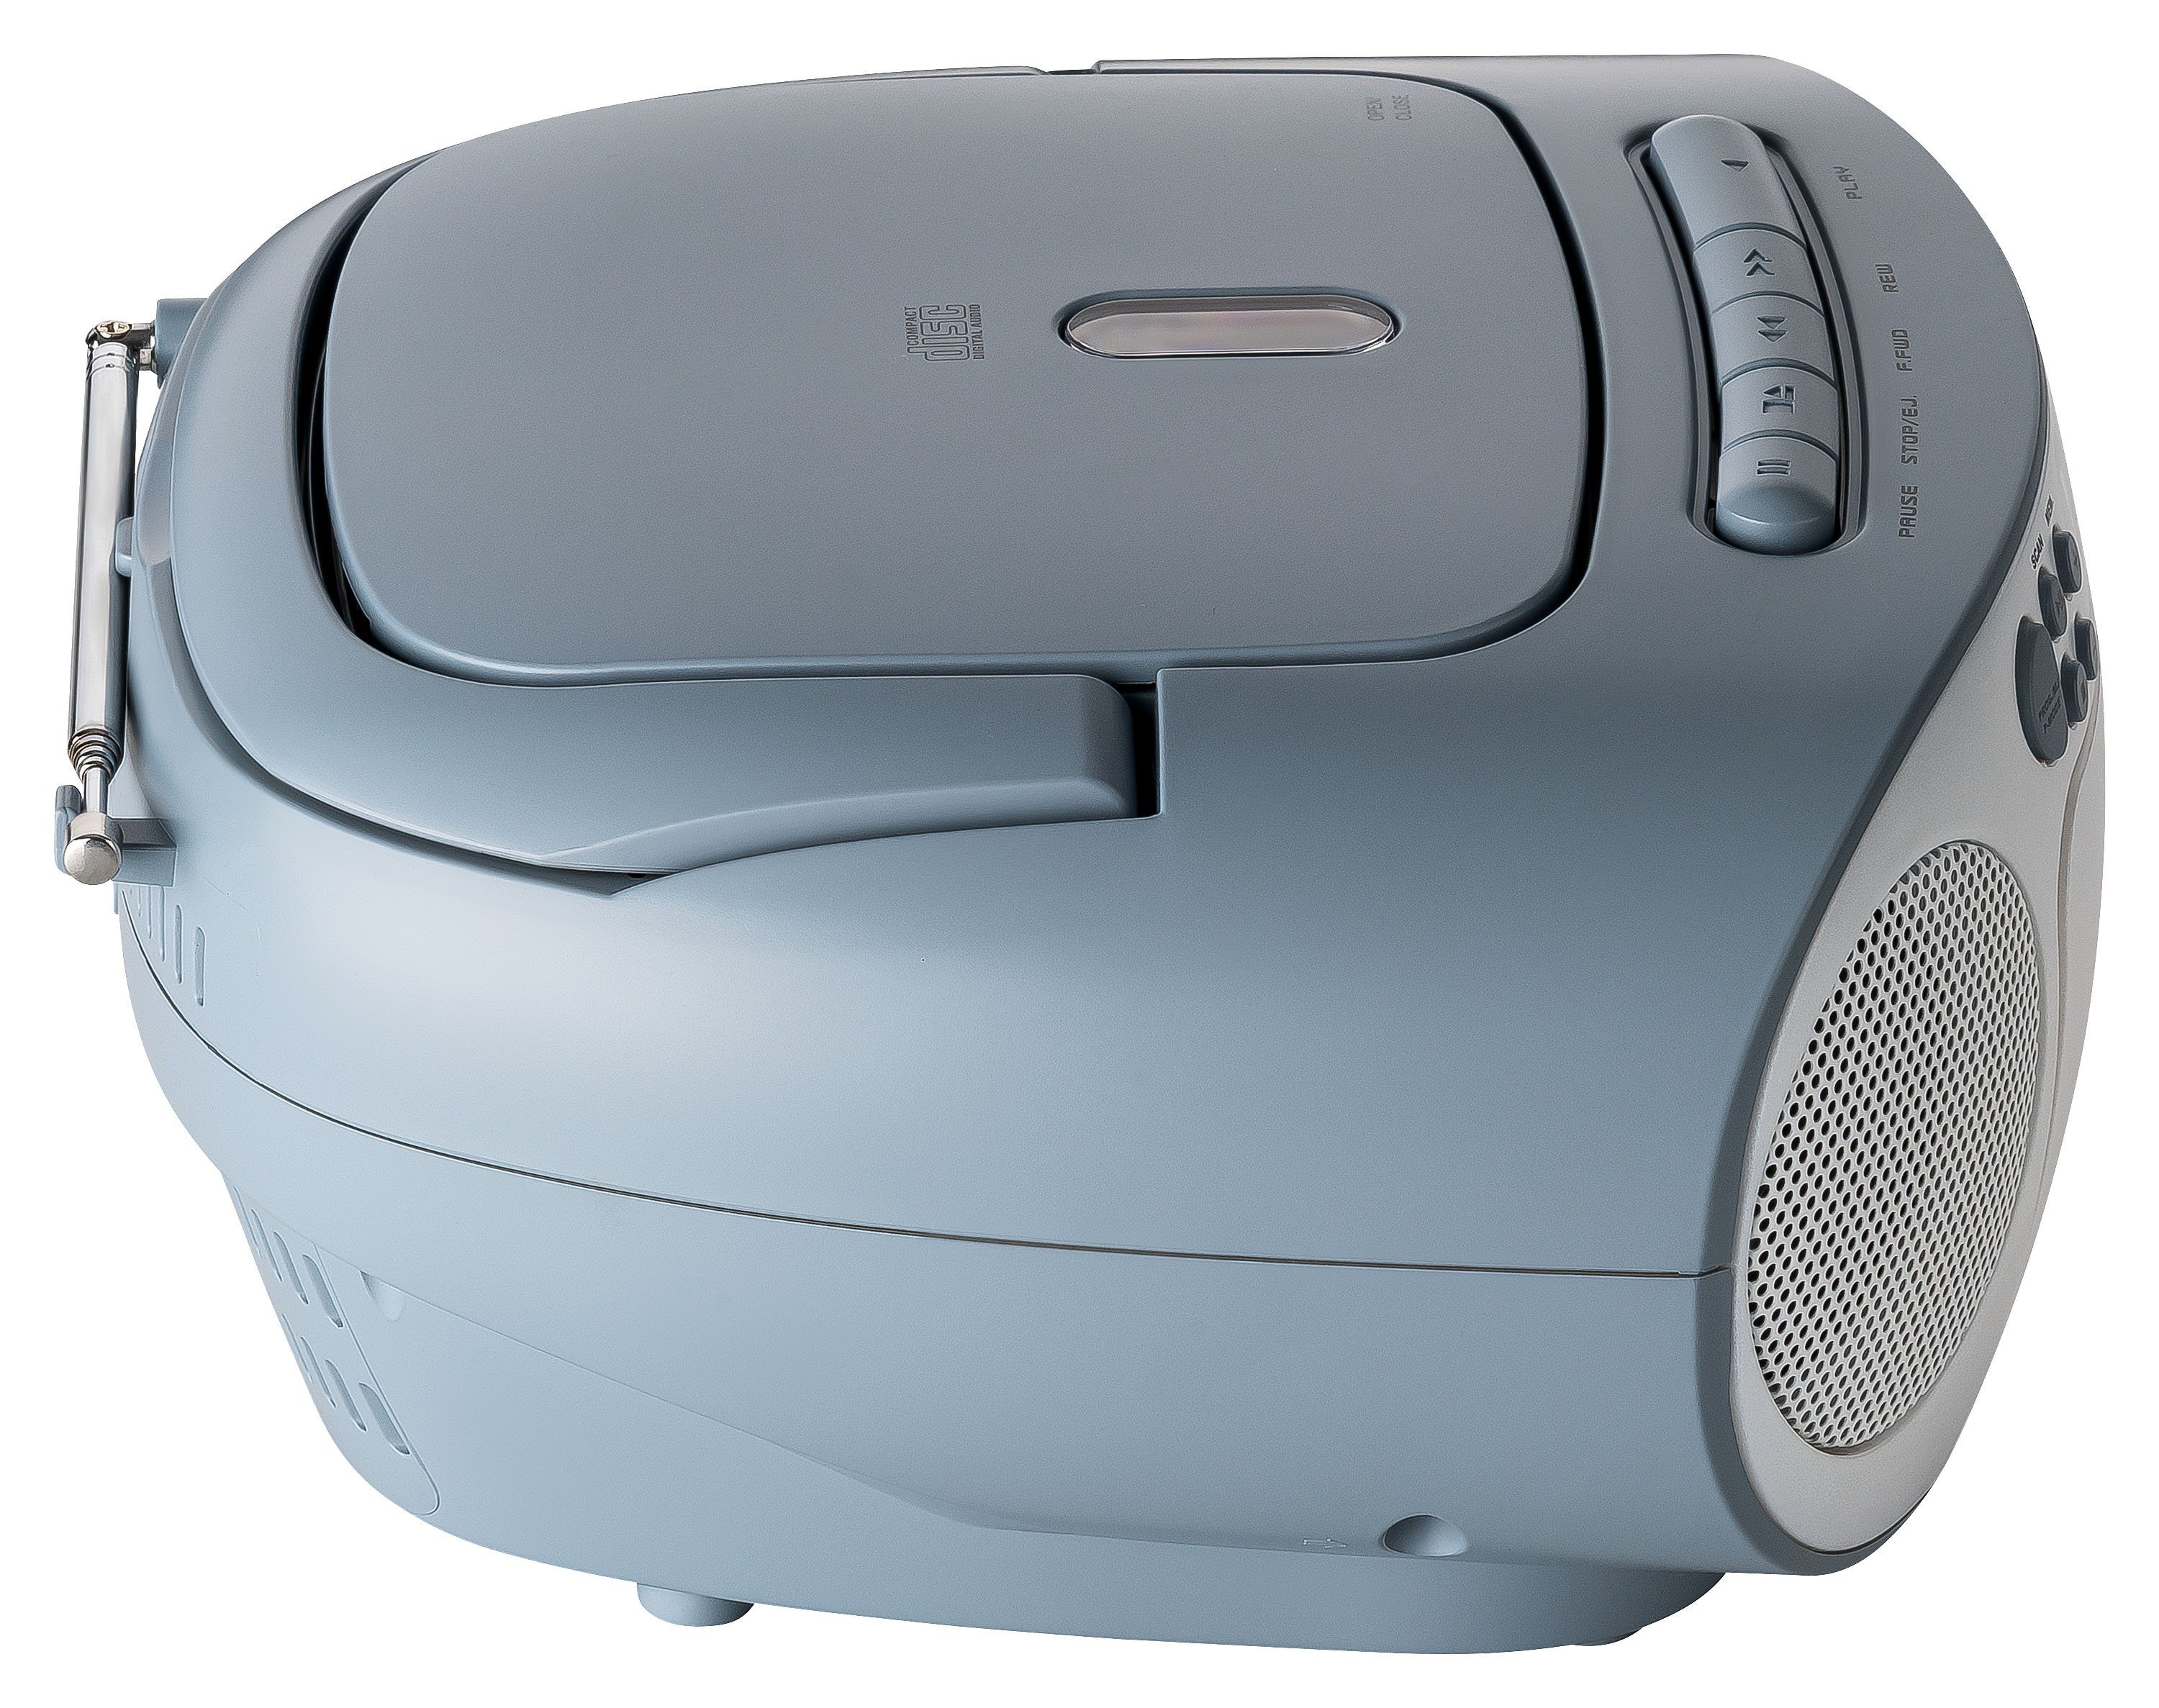 W, Boombox RCR2260 CD/Radio/Kassette, LCD-Display, weiß/blau Tragbare PLL (UKW Kopfhörer-Anschluss) Boombox AUX-Eingang, Radio, Stereo Reflexion 20